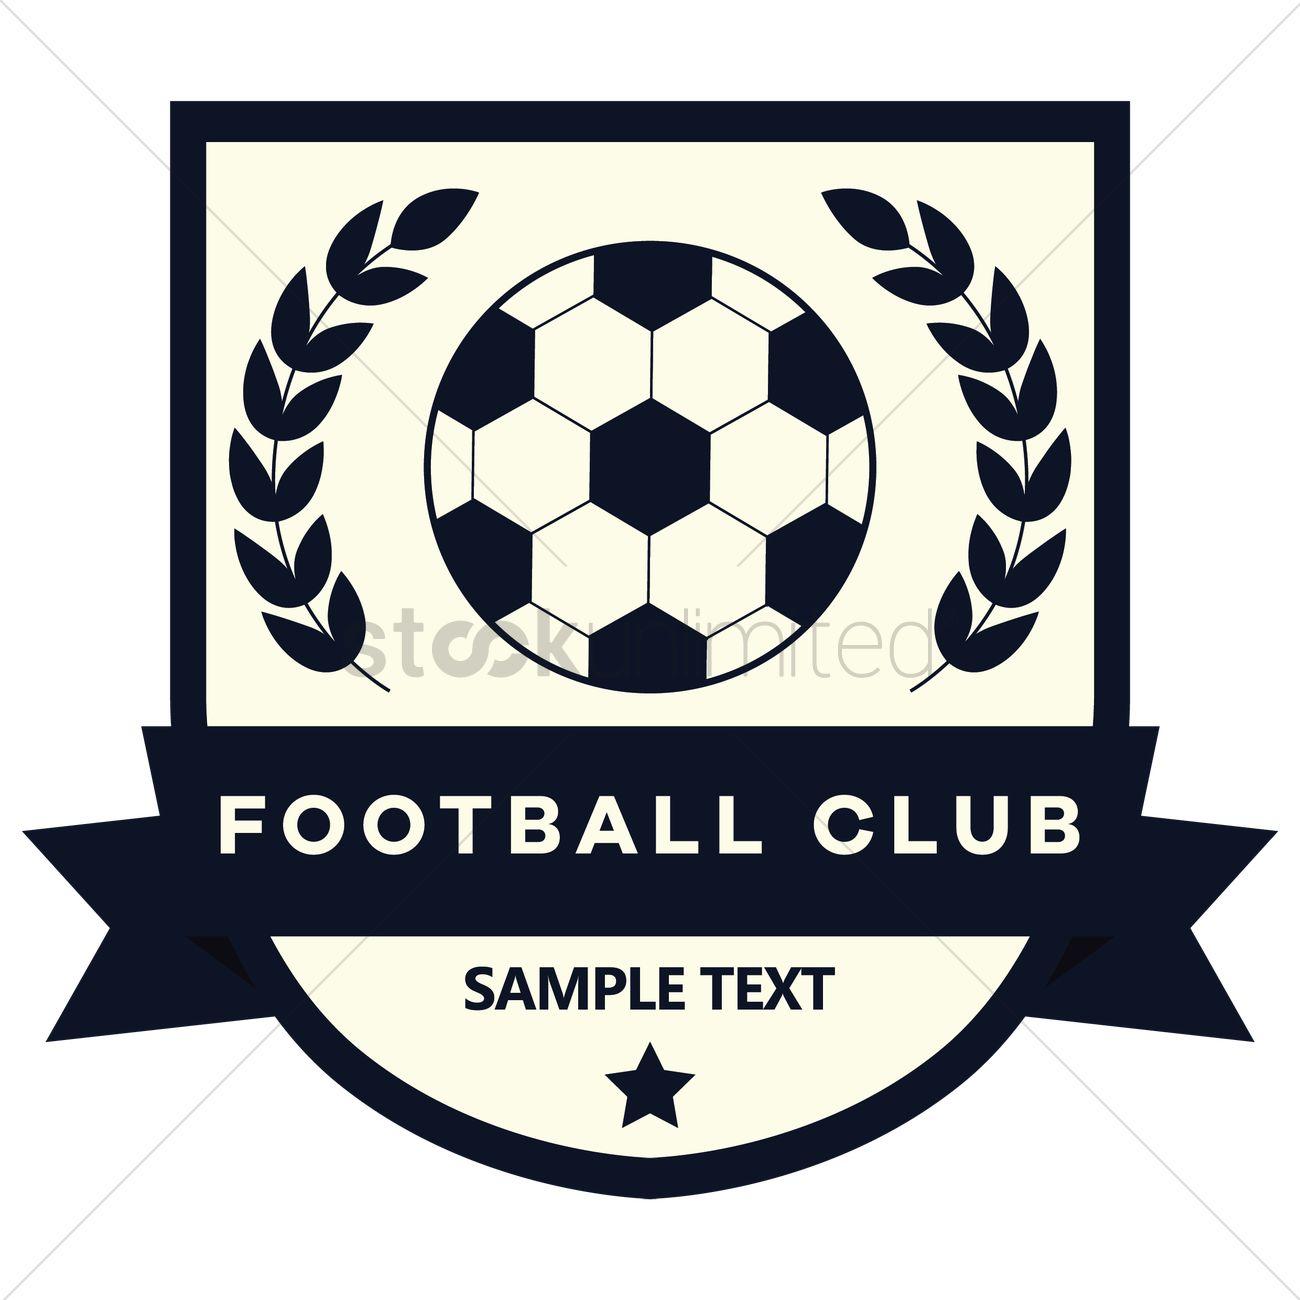 Clubs Logo - Football club logo Vector Image - 1526991 | StockUnlimited